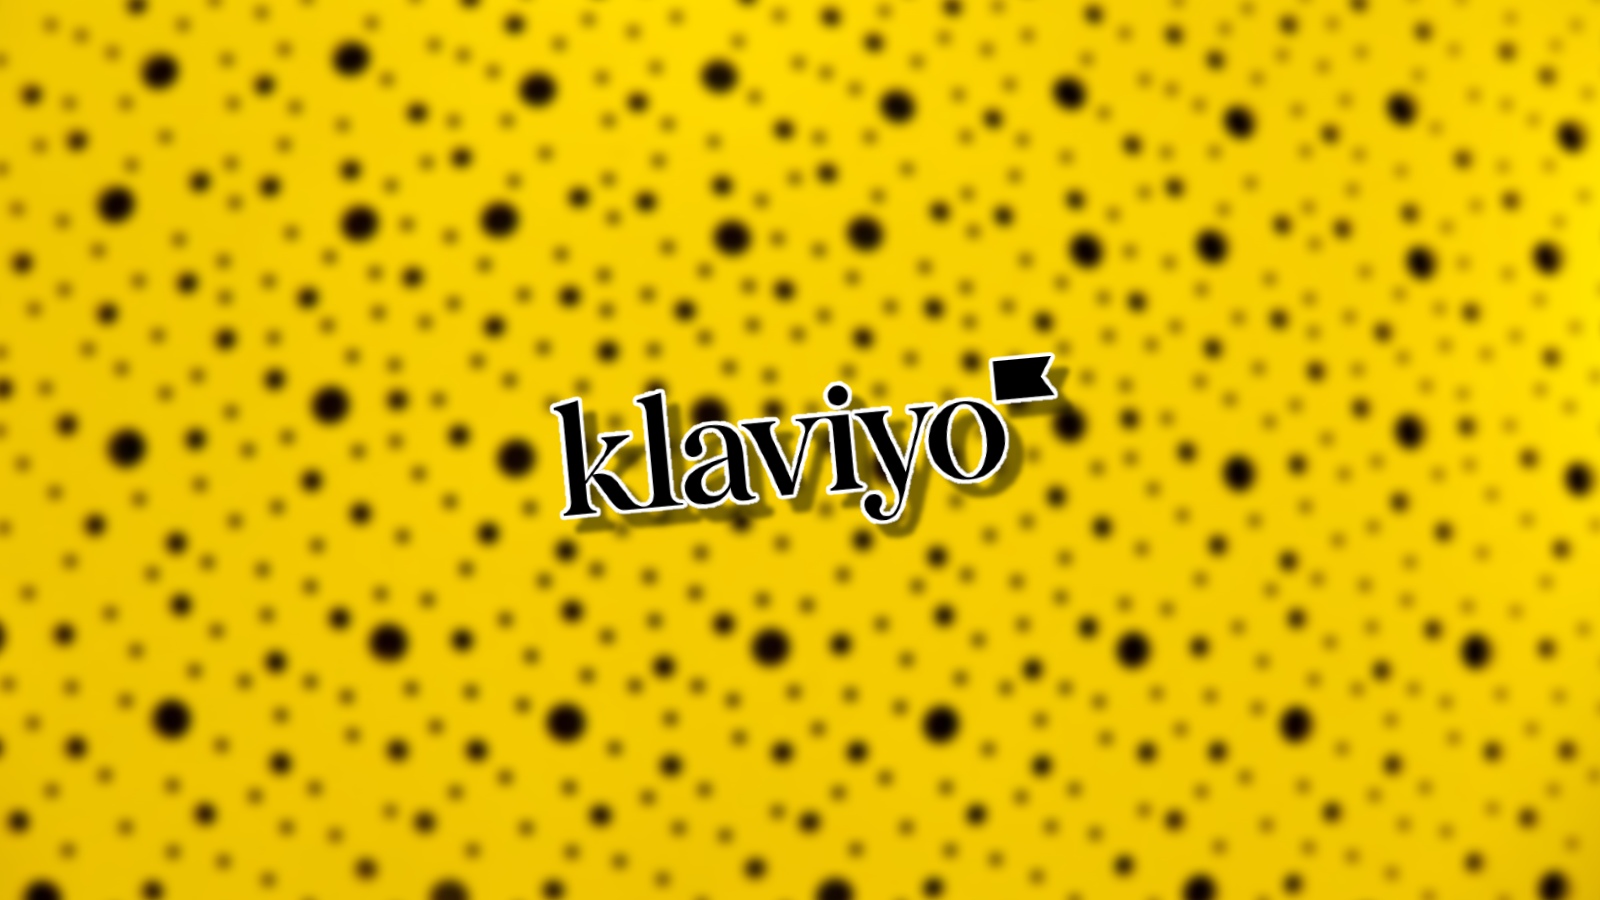 Klaviyo logo on a yellow polka-dotted background